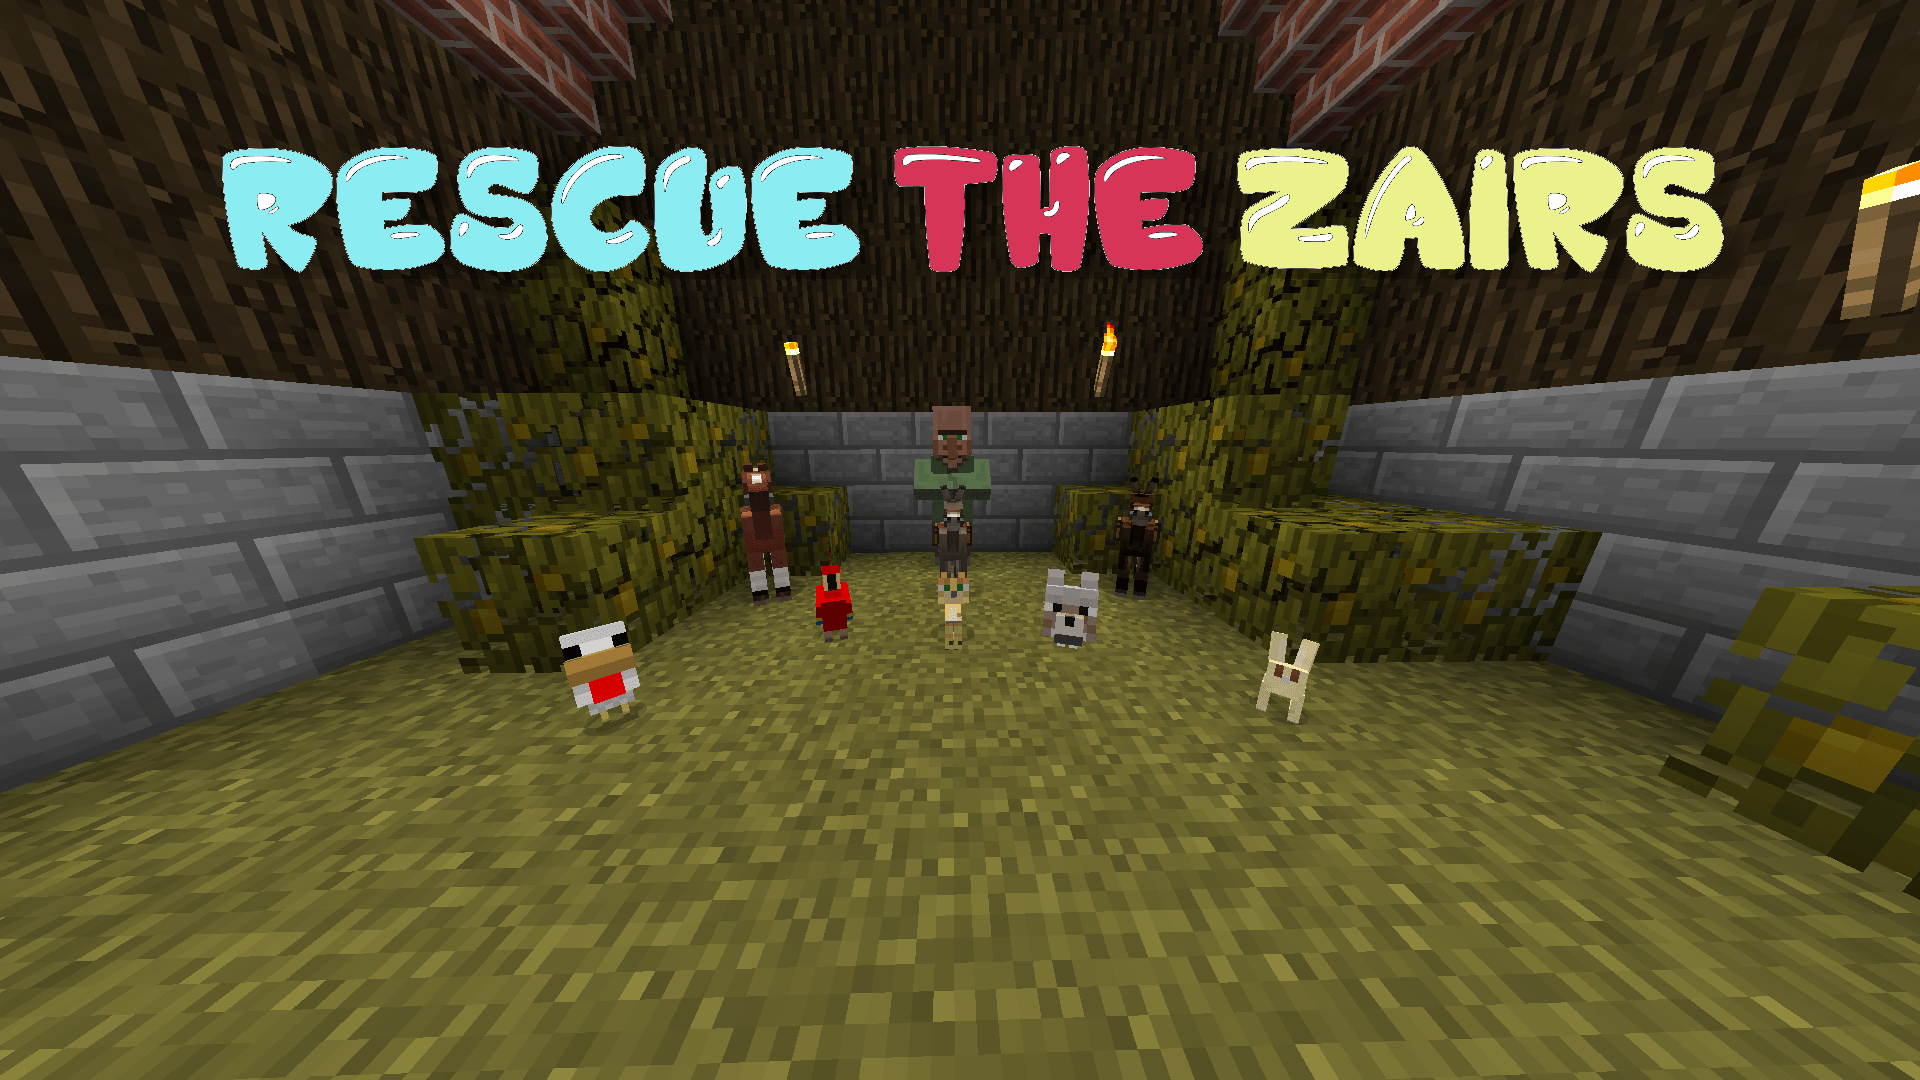 Baixar Rescue The Zairs para Minecraft 1.13.2